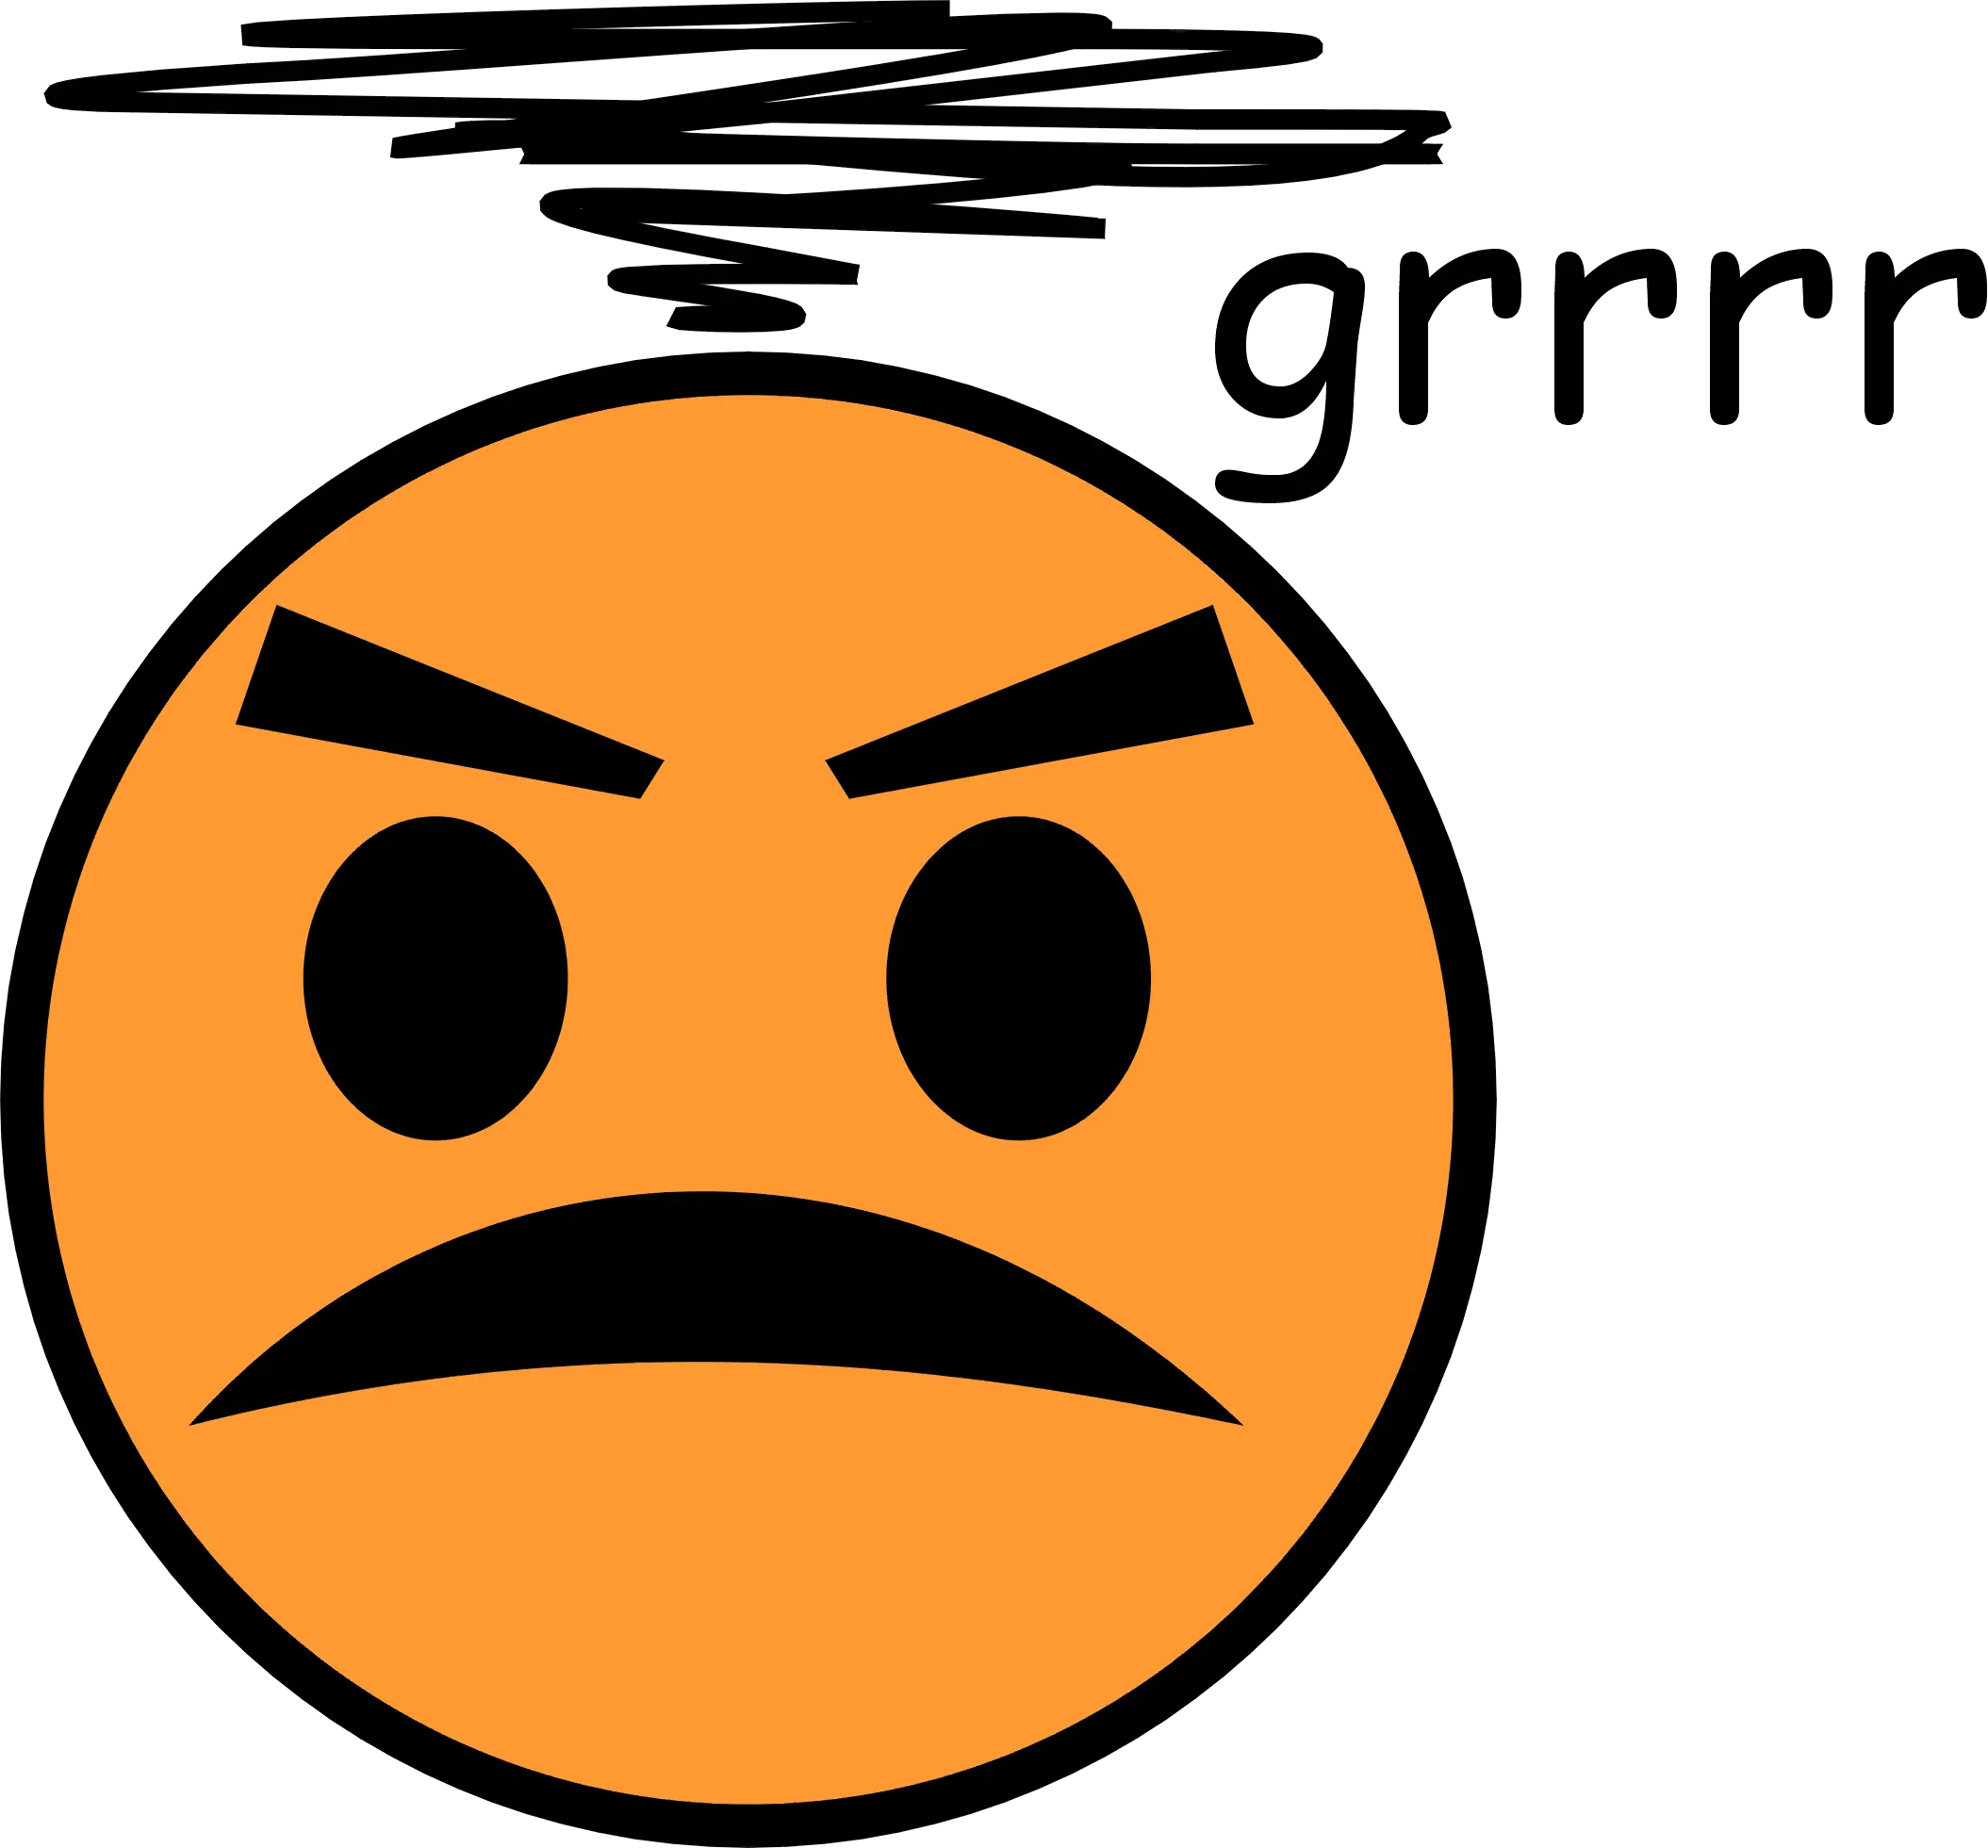 Fileraiva Agericongif Wikimedia Commons Simbolos De Raiva Png Anger Icon